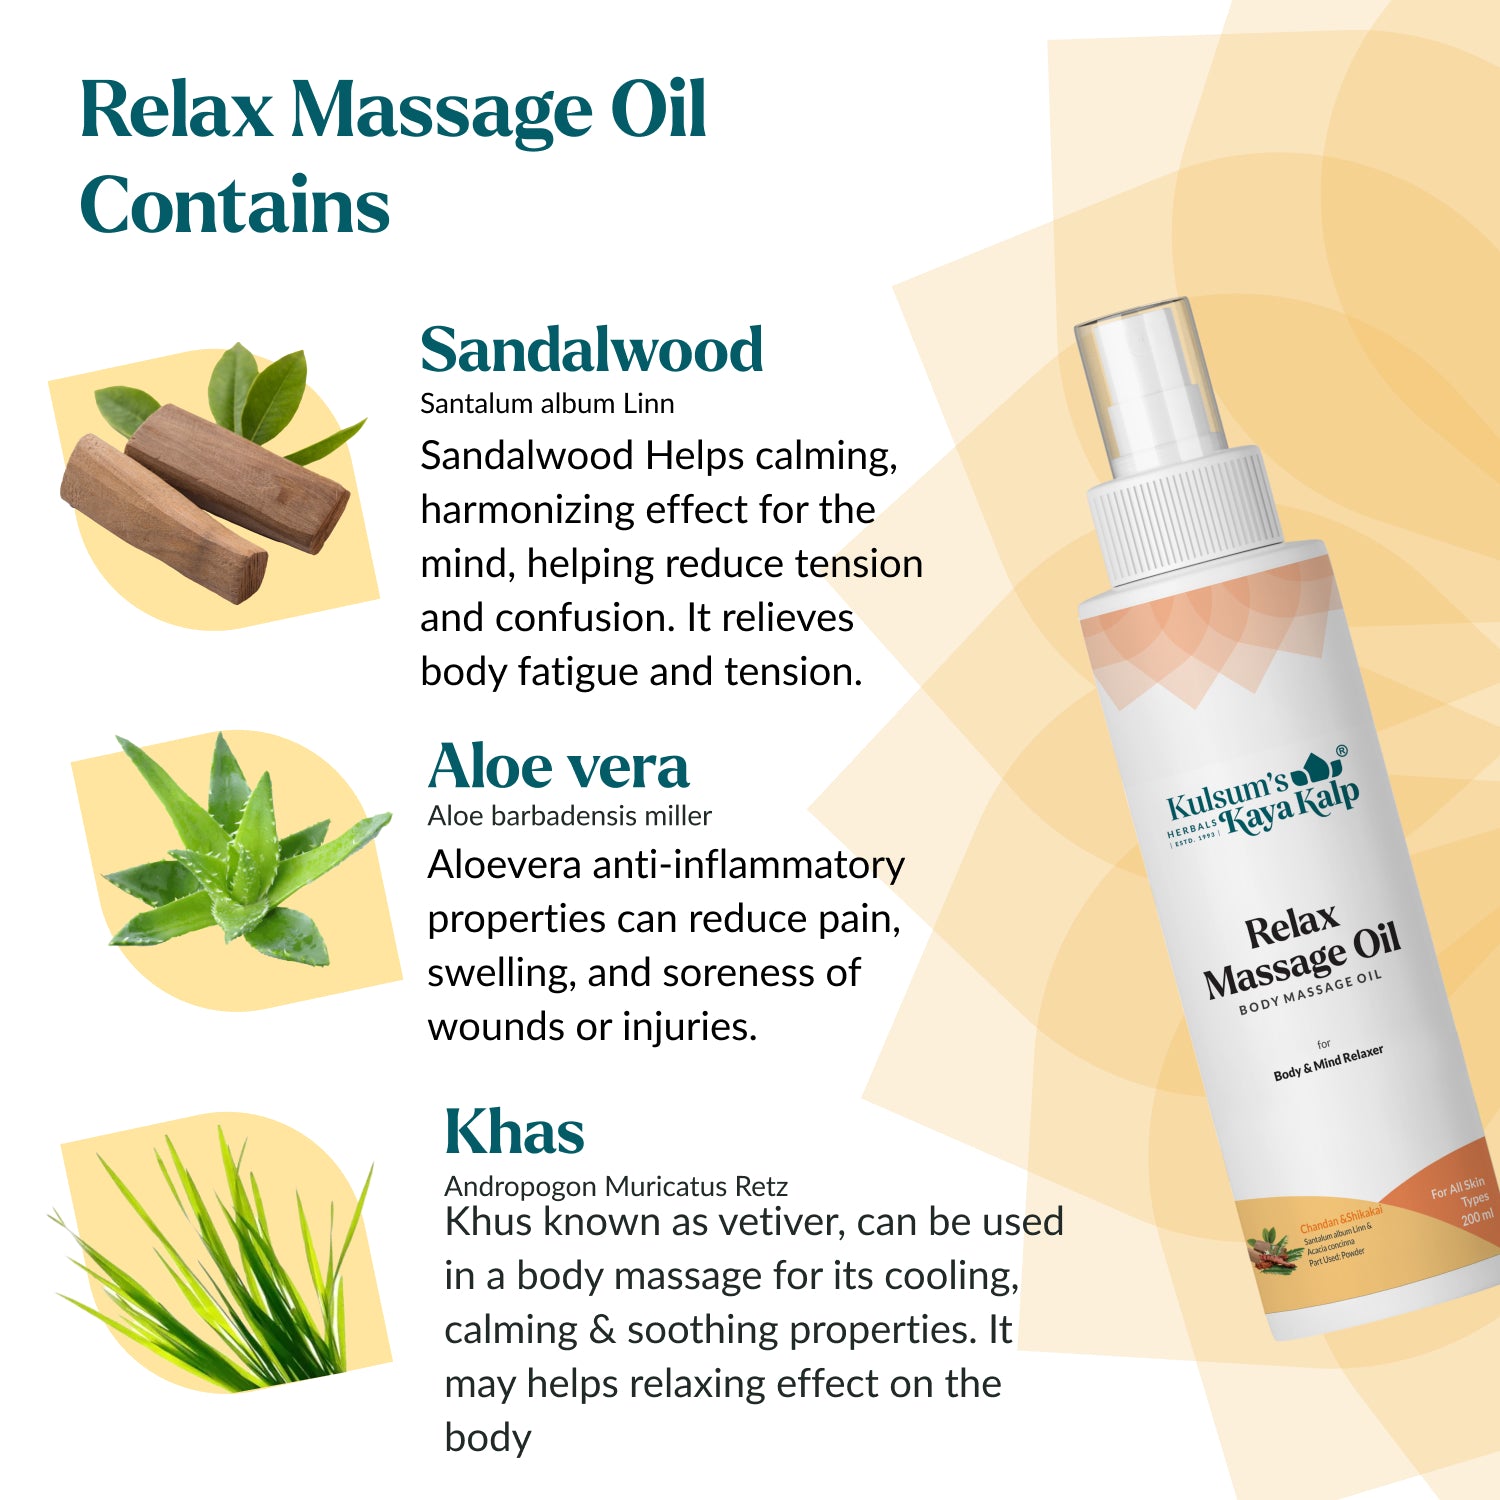 Kulsum's Kaya Kalp Herbals Relax Massage Oil 200ML